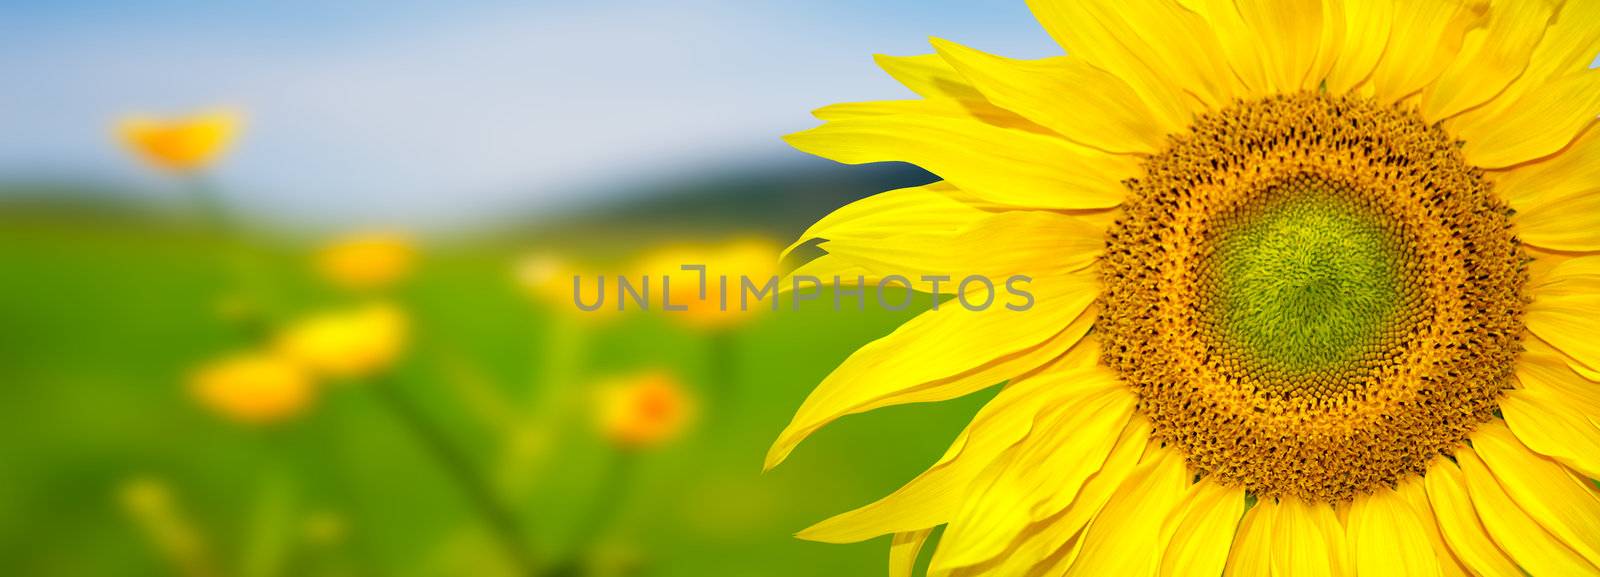 Sunflower banner by Wajan